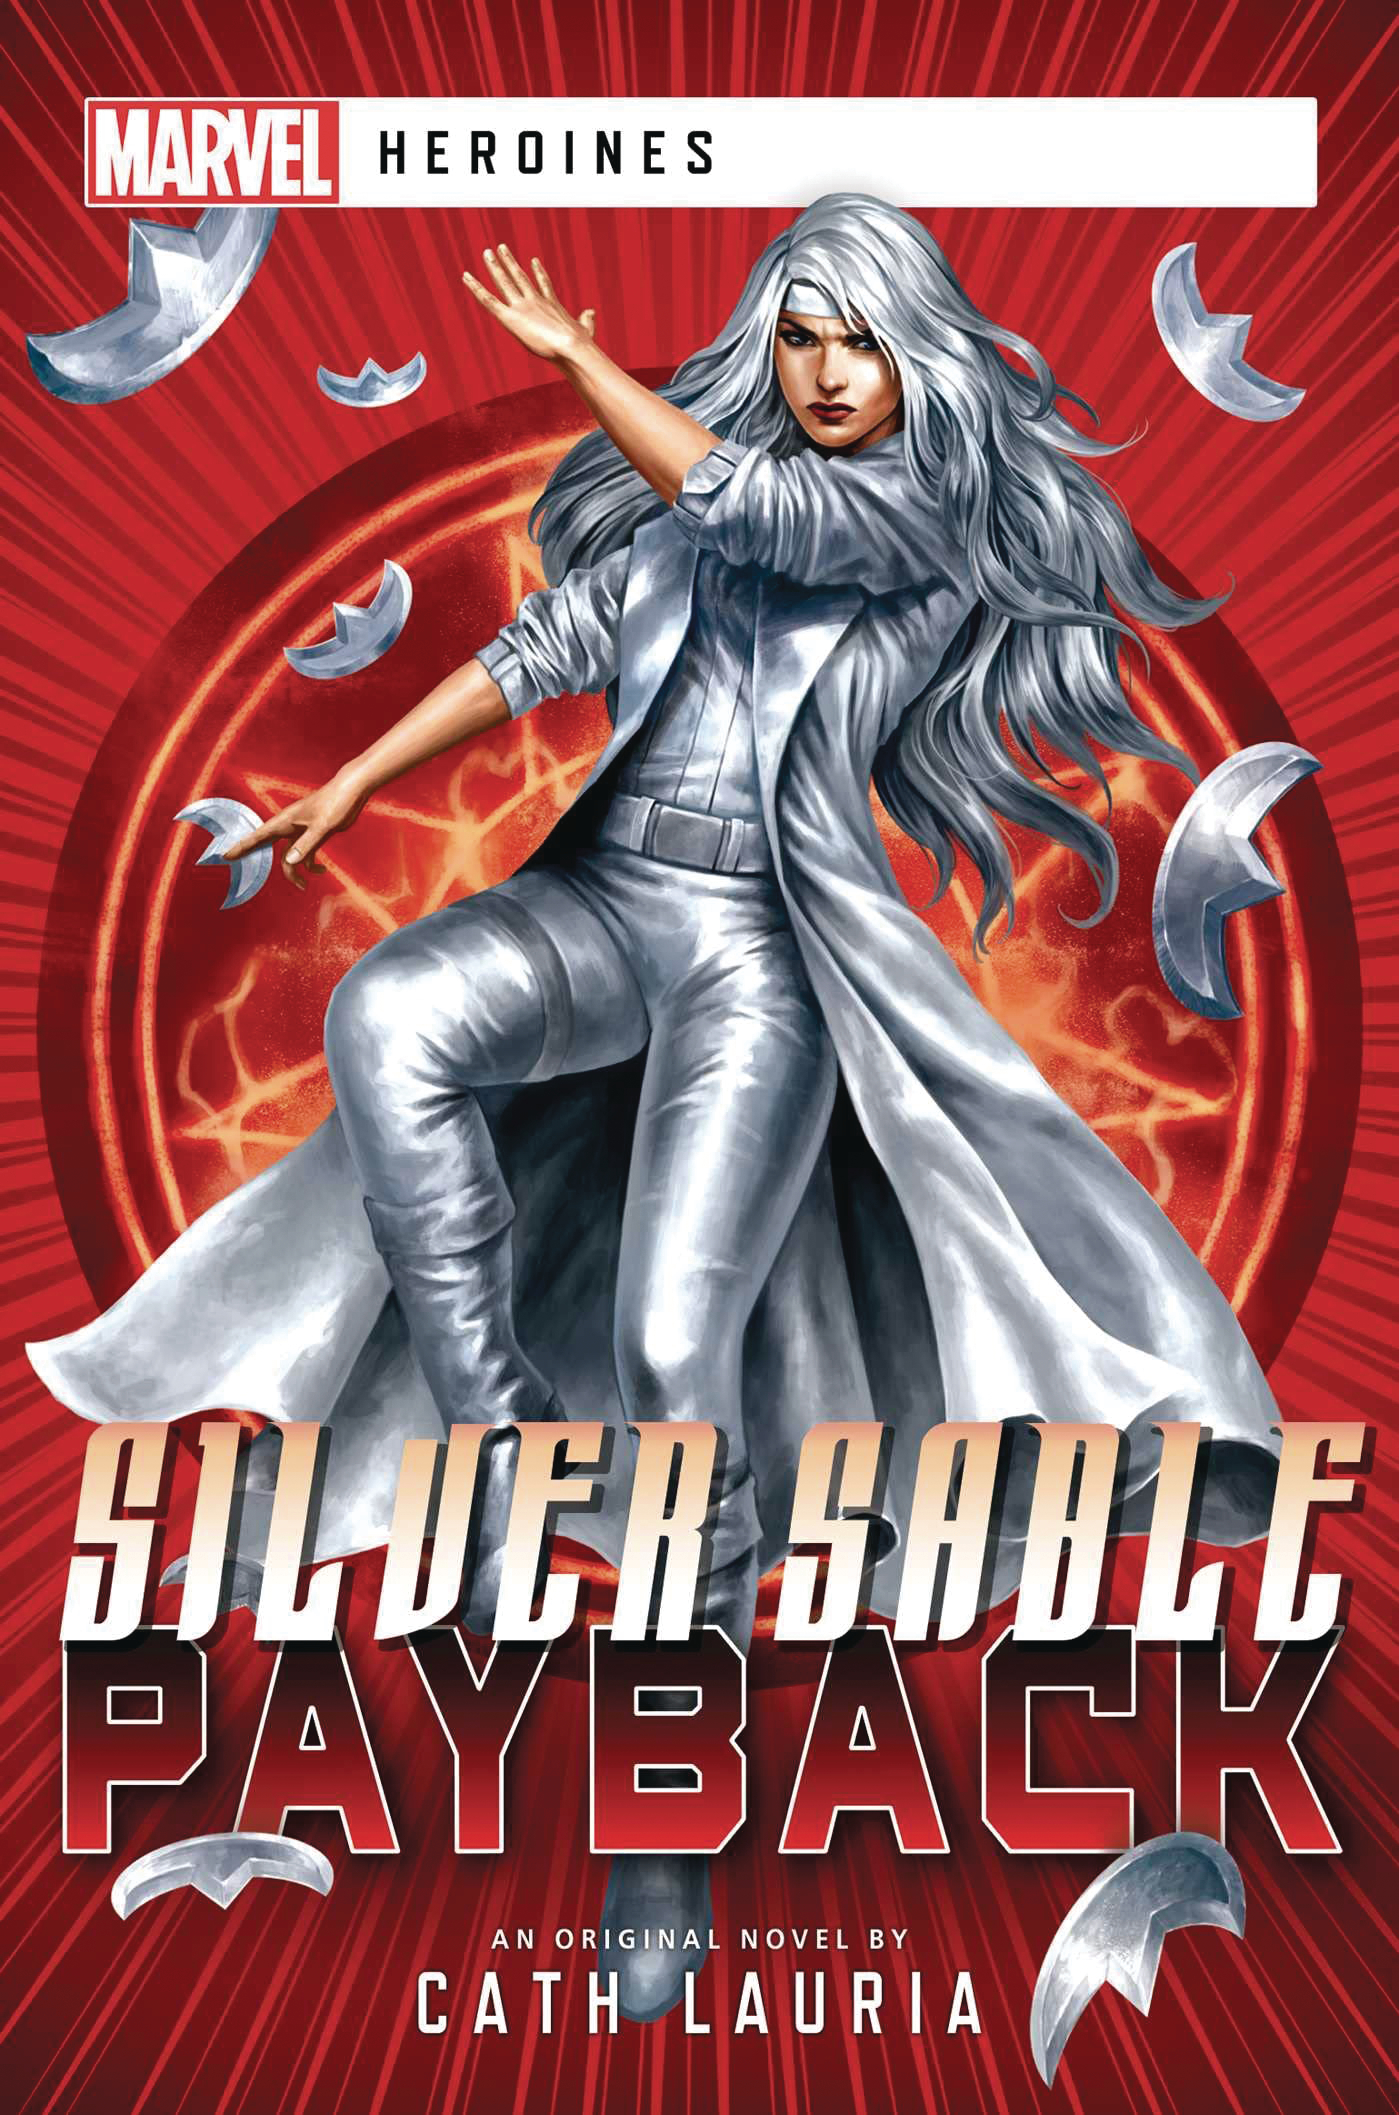 Marvel Heroines Novel Soft Cover #5 Silver Sable Payback